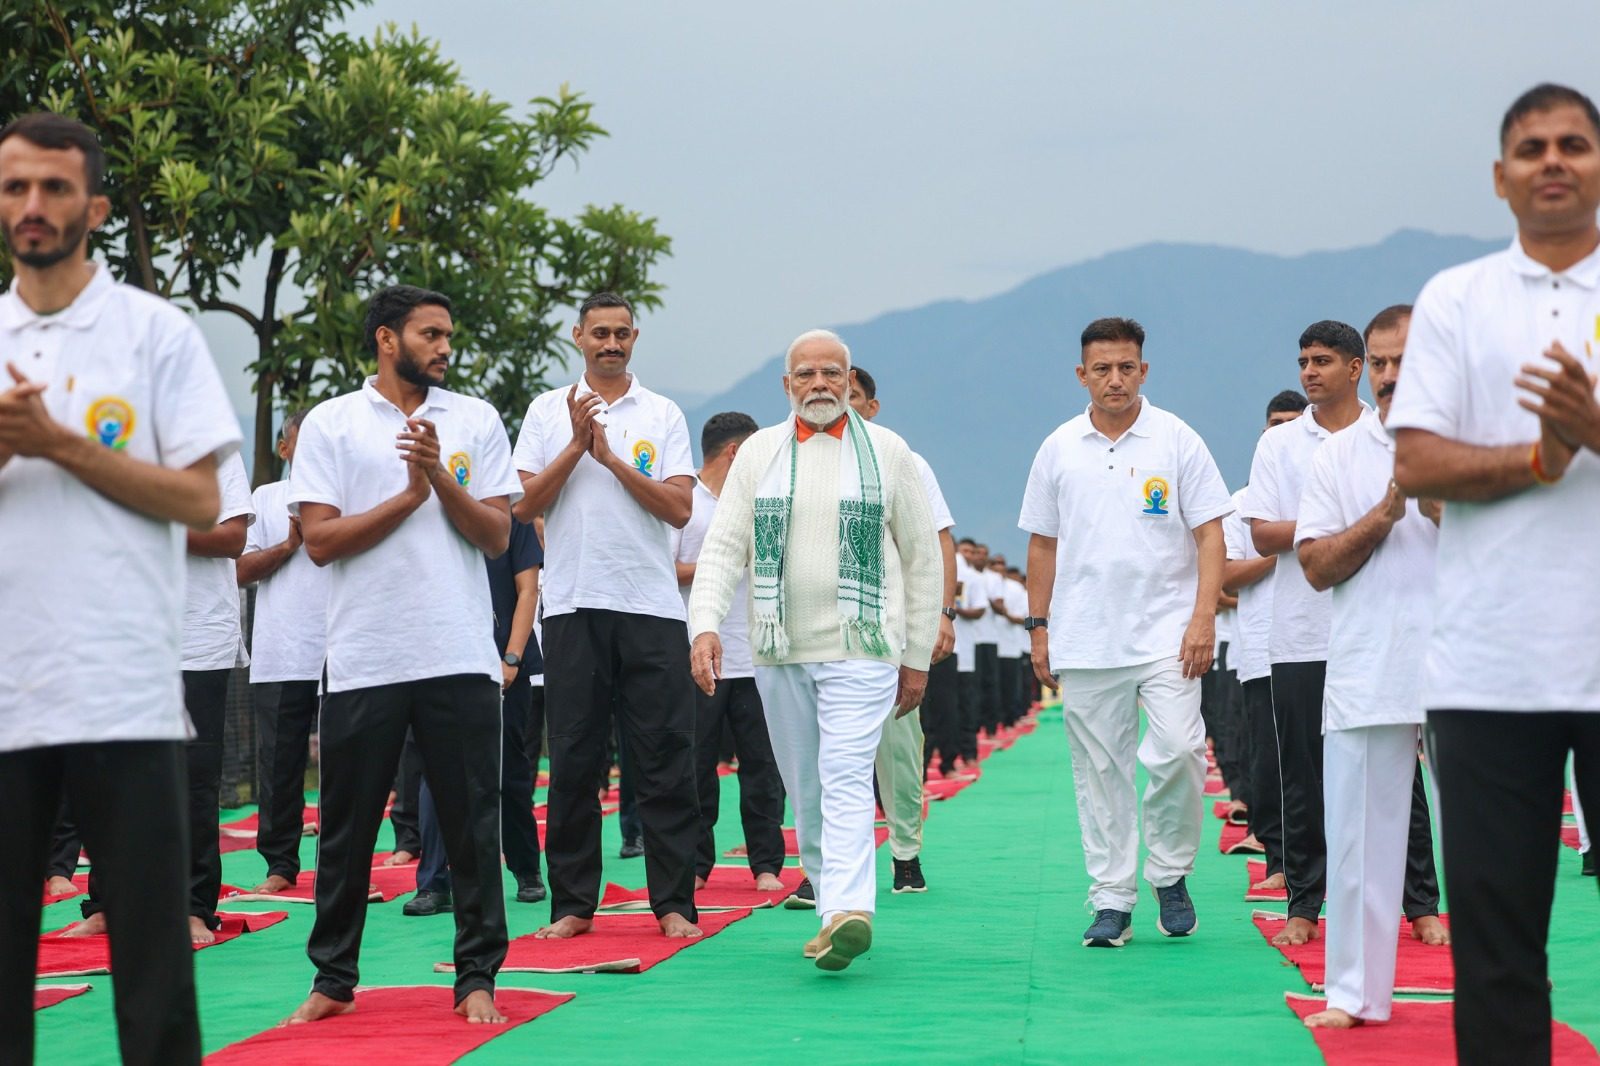 India’s Prime Minister Narendra Modi at the International Day of Yoga programme in Srinagar, Kashmir. Photo: Government of Jammu & Kashmir 